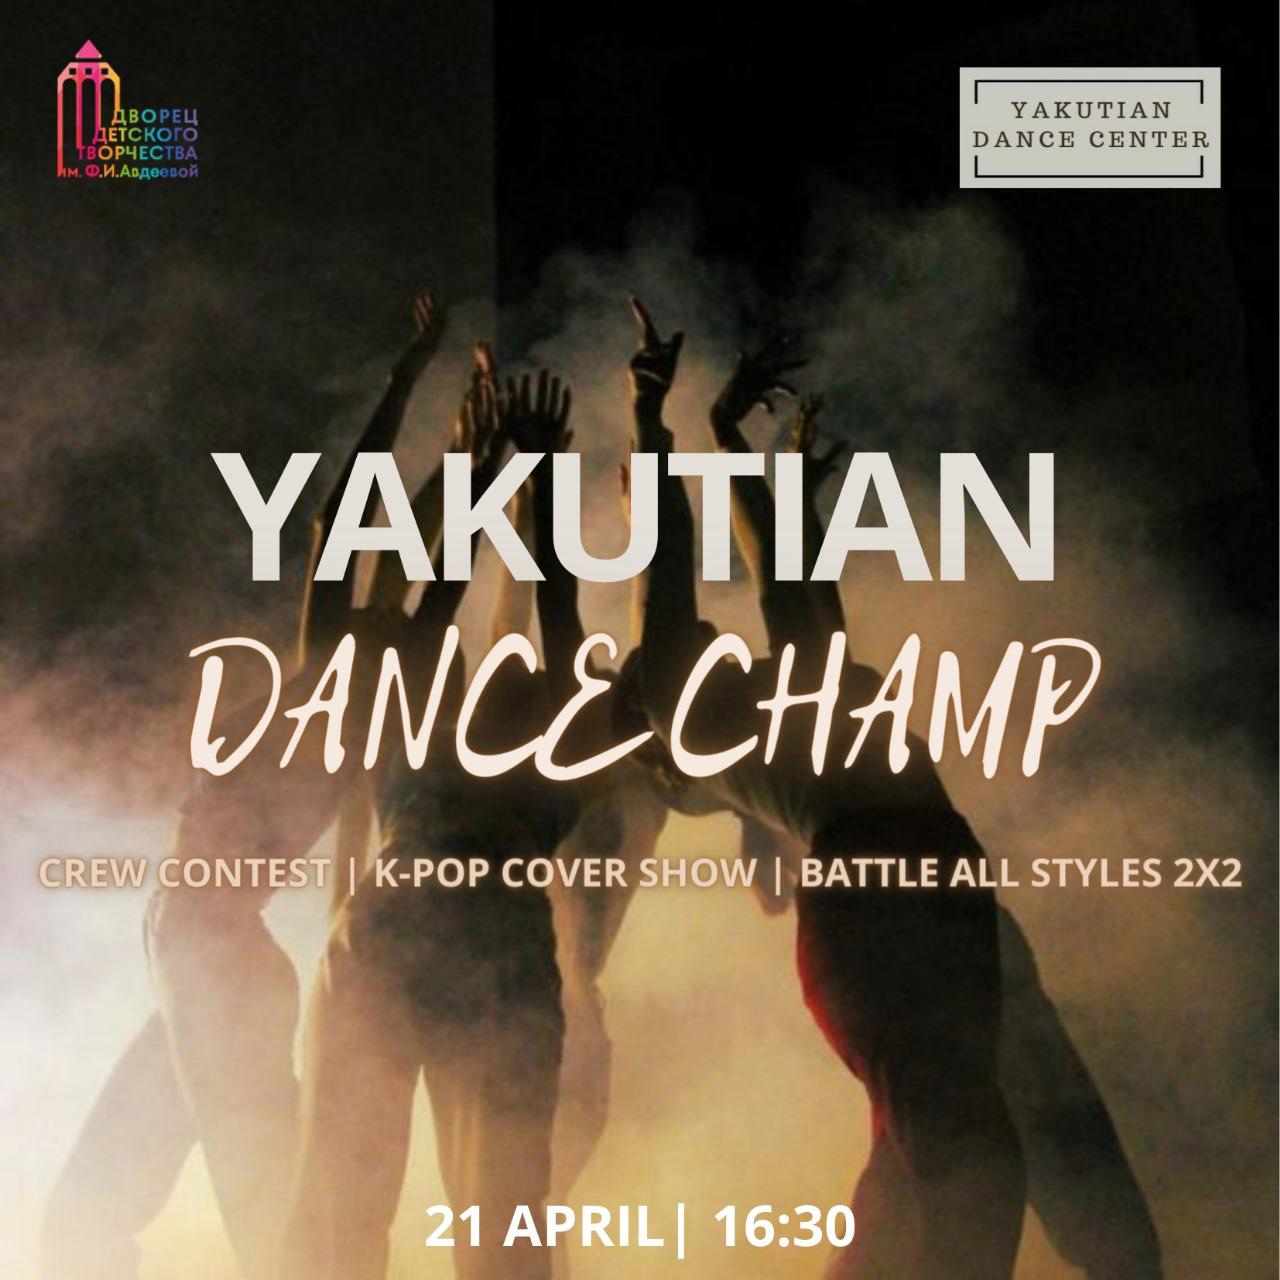 Yakutian dance champ